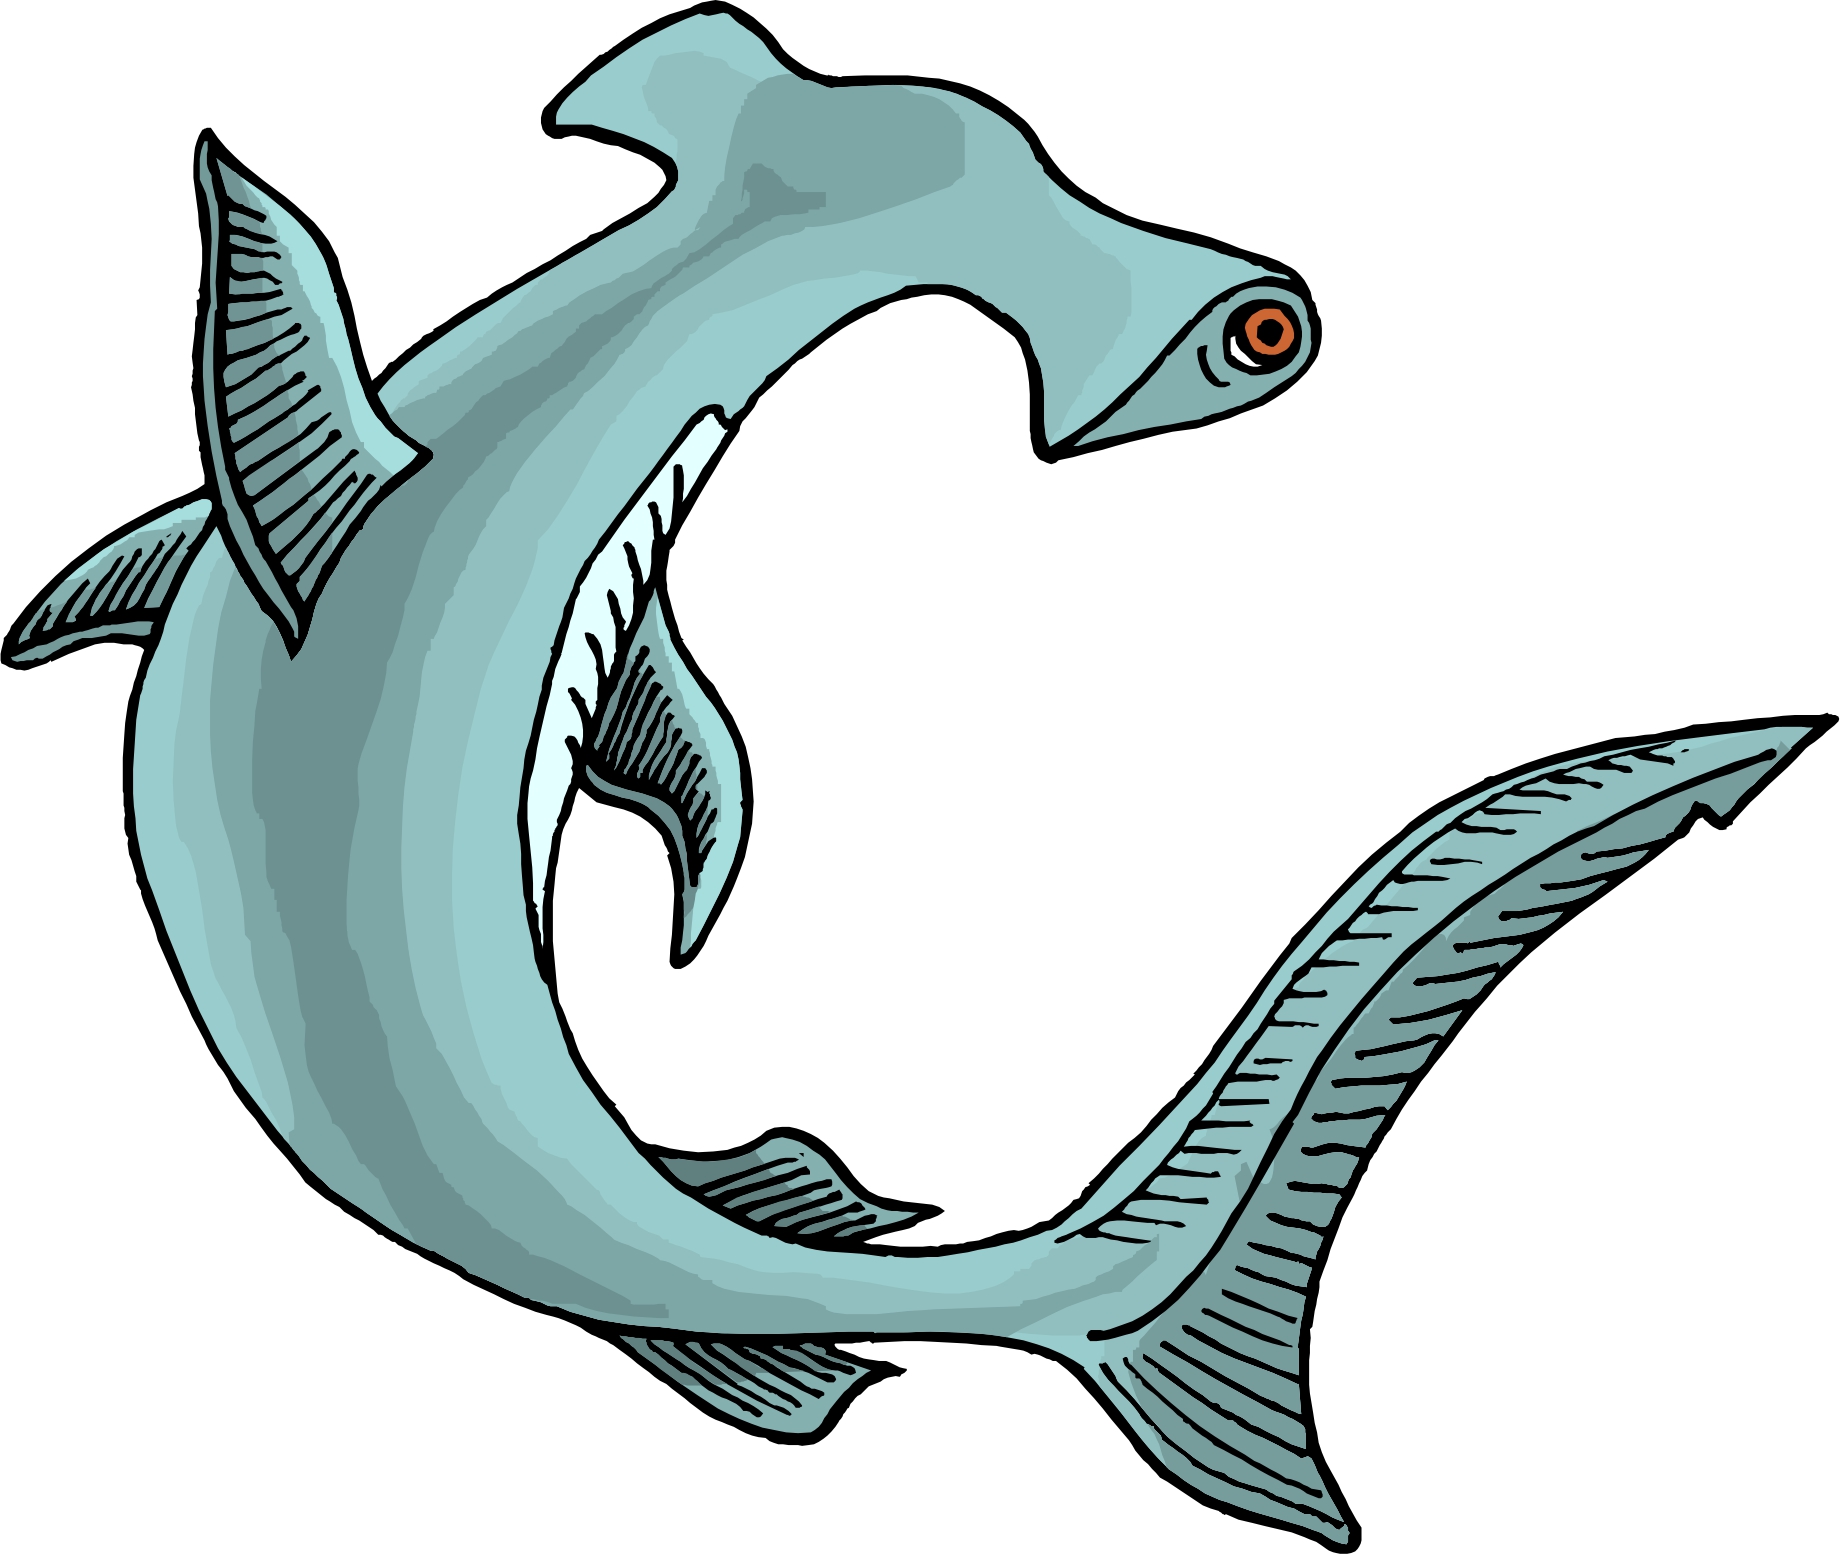 Cartoon Hammerhead Shark Images & Pictures - Becuo